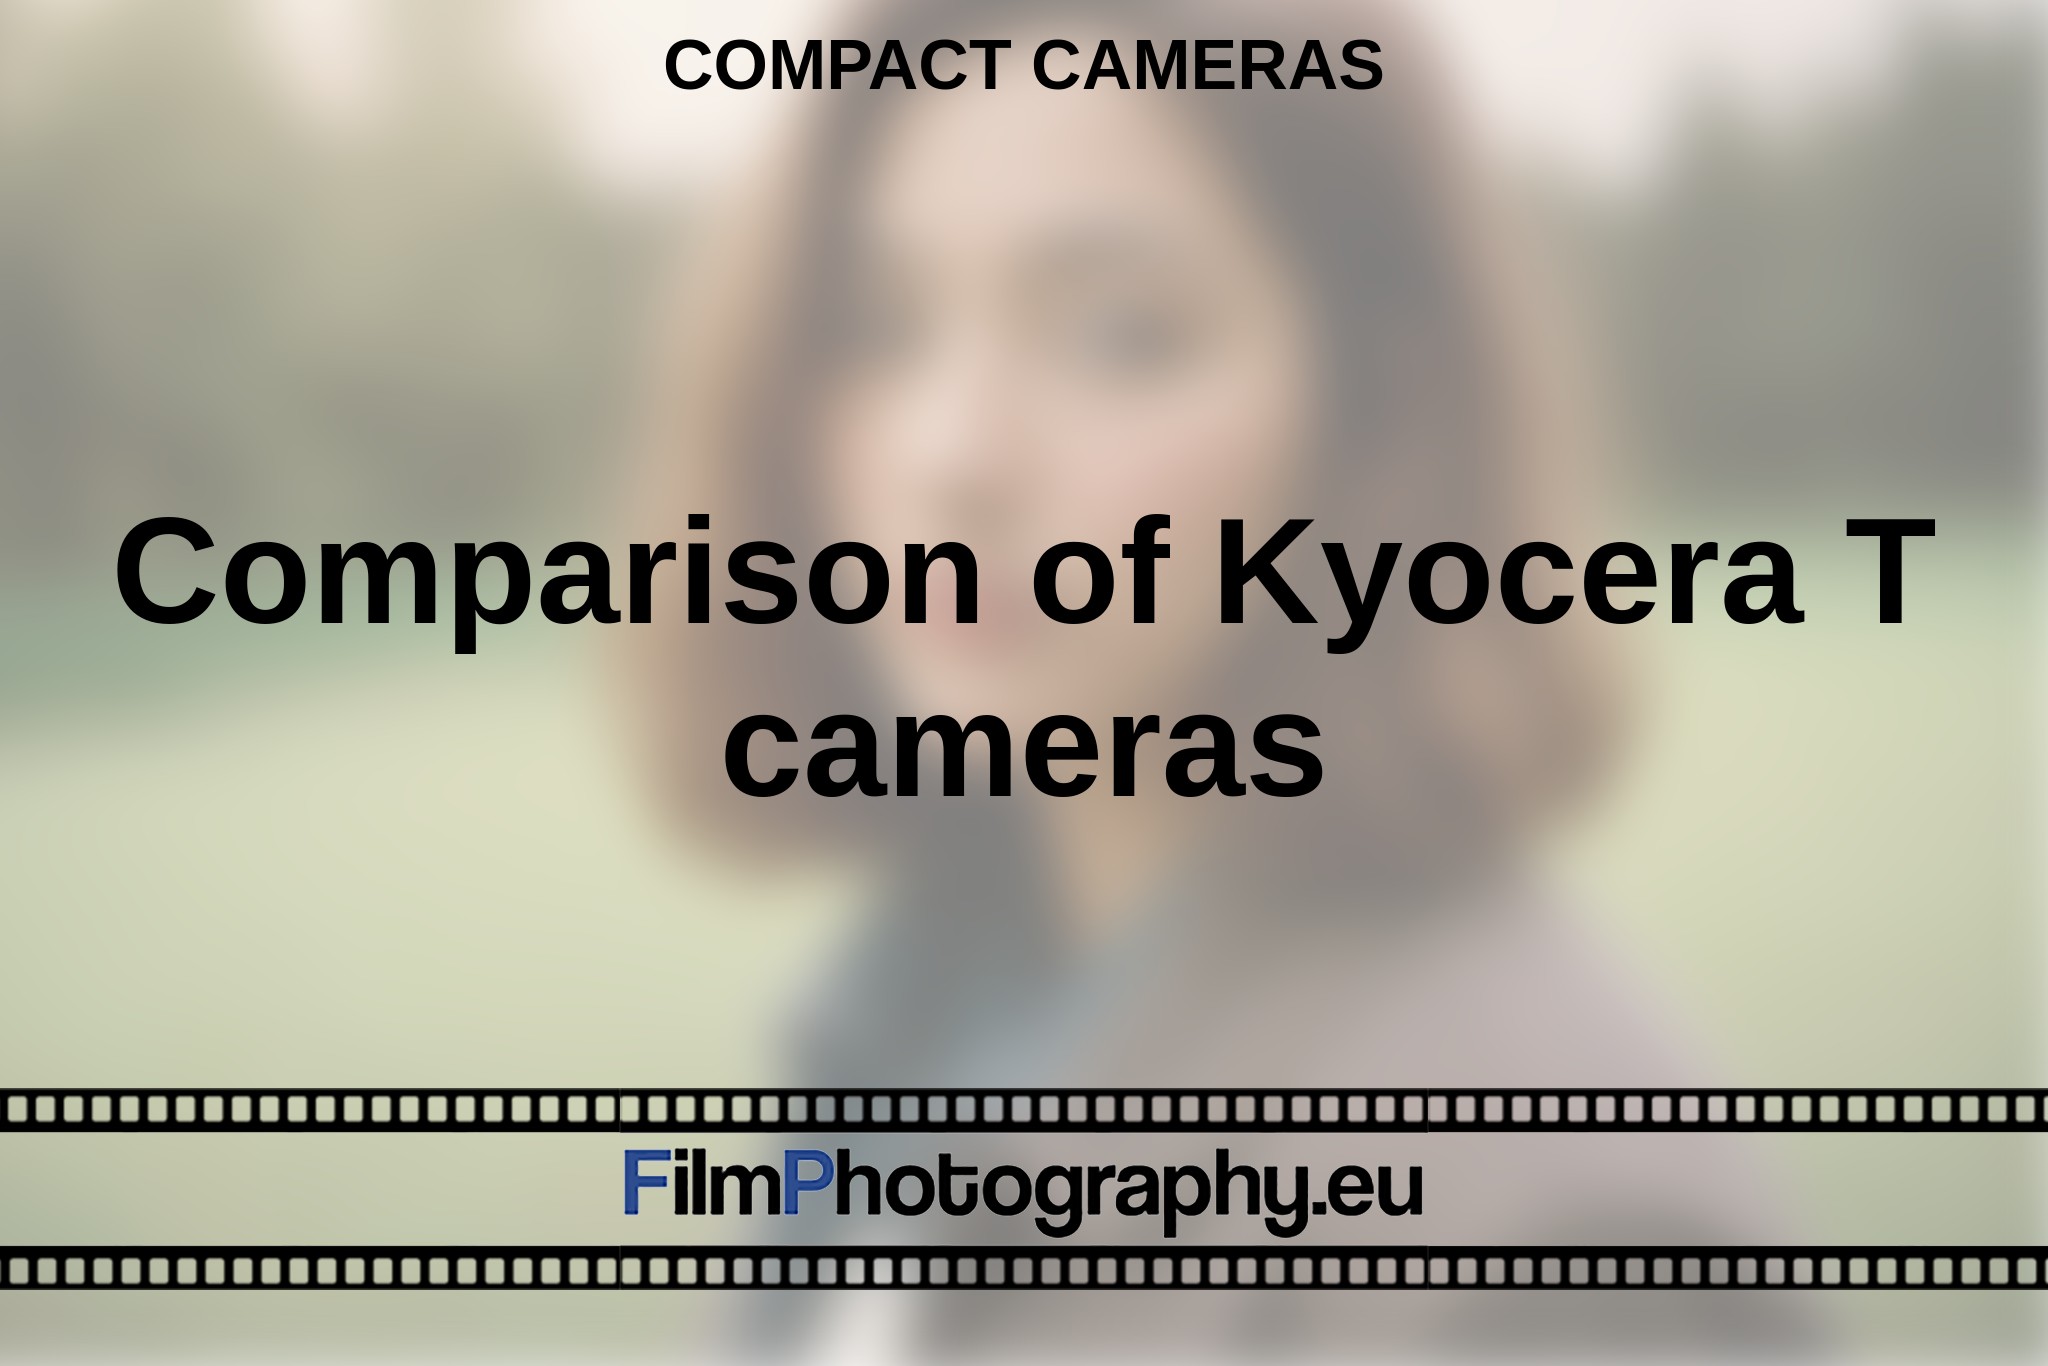 comparison-of-kyocera-t-cameras-compact-cameras-bnv.jpg